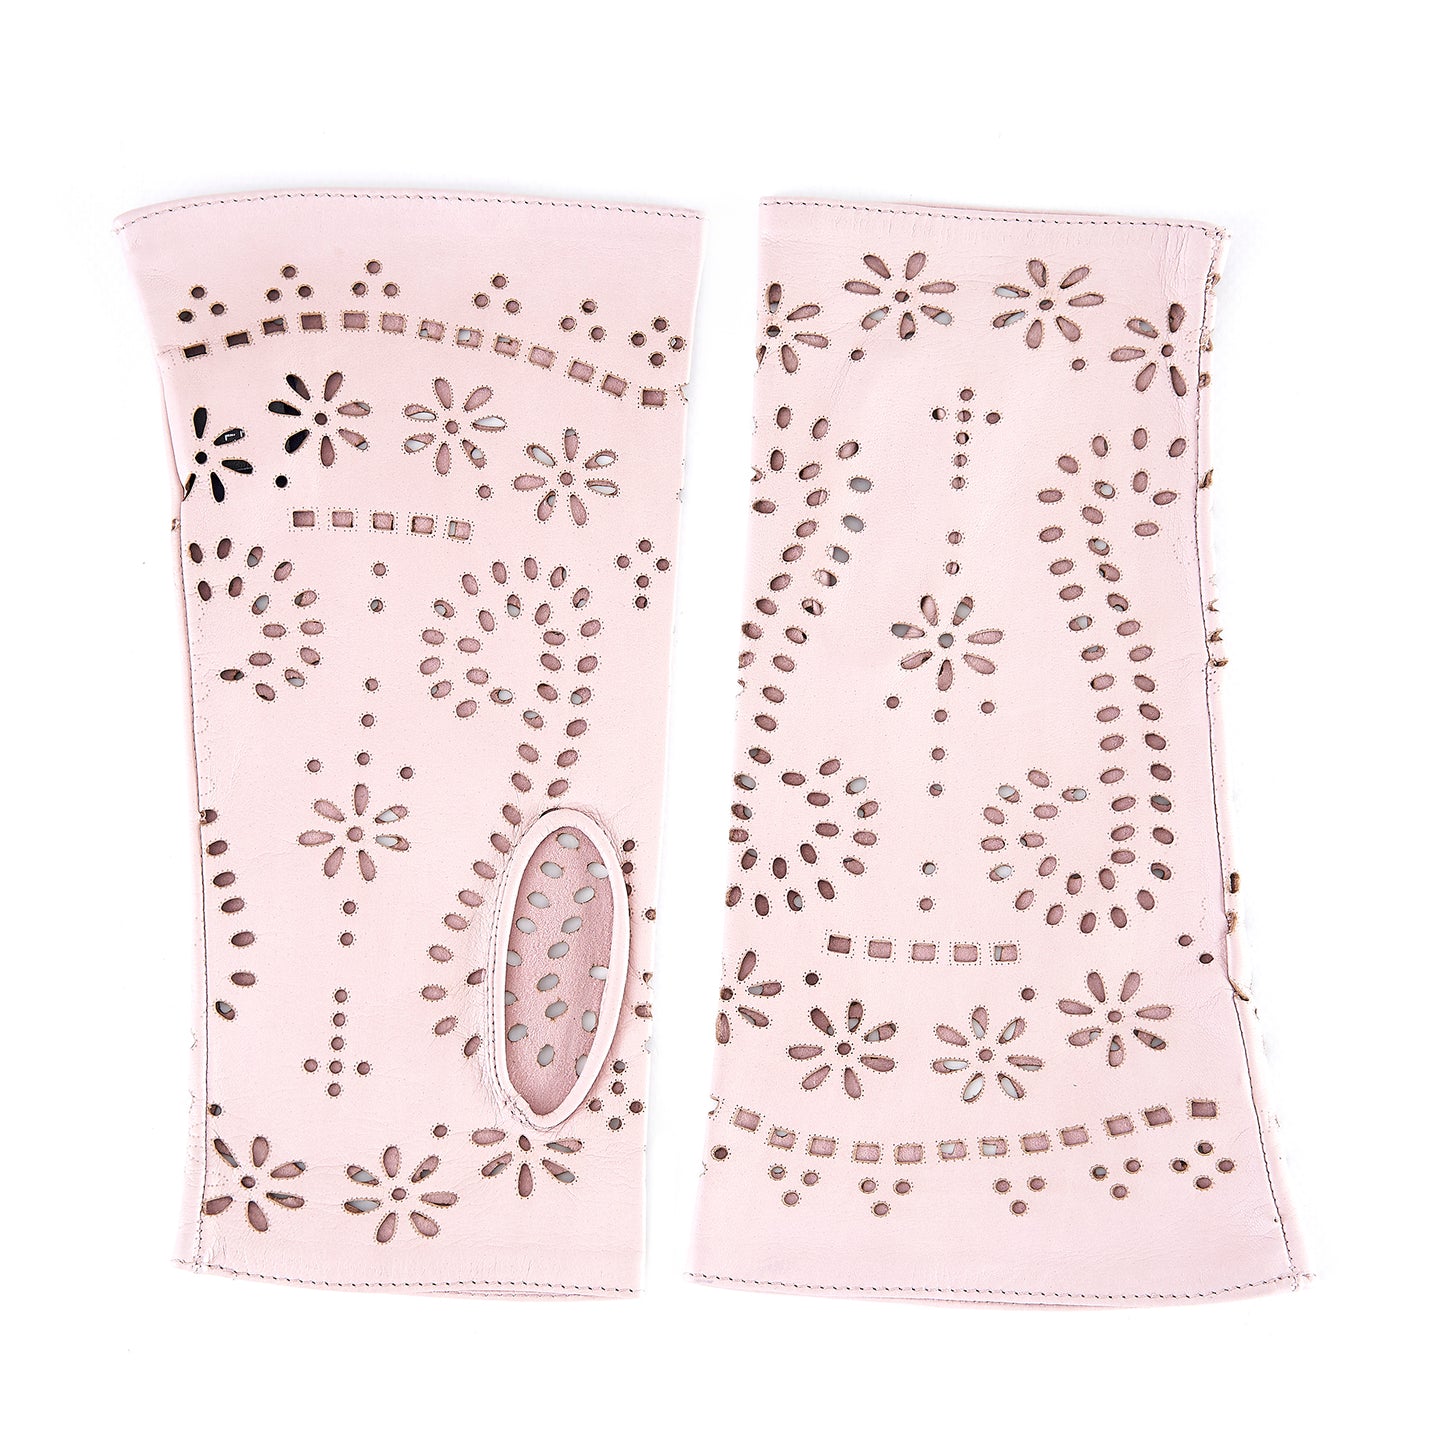 Women's fingerless rose nappa leather gloves unlined